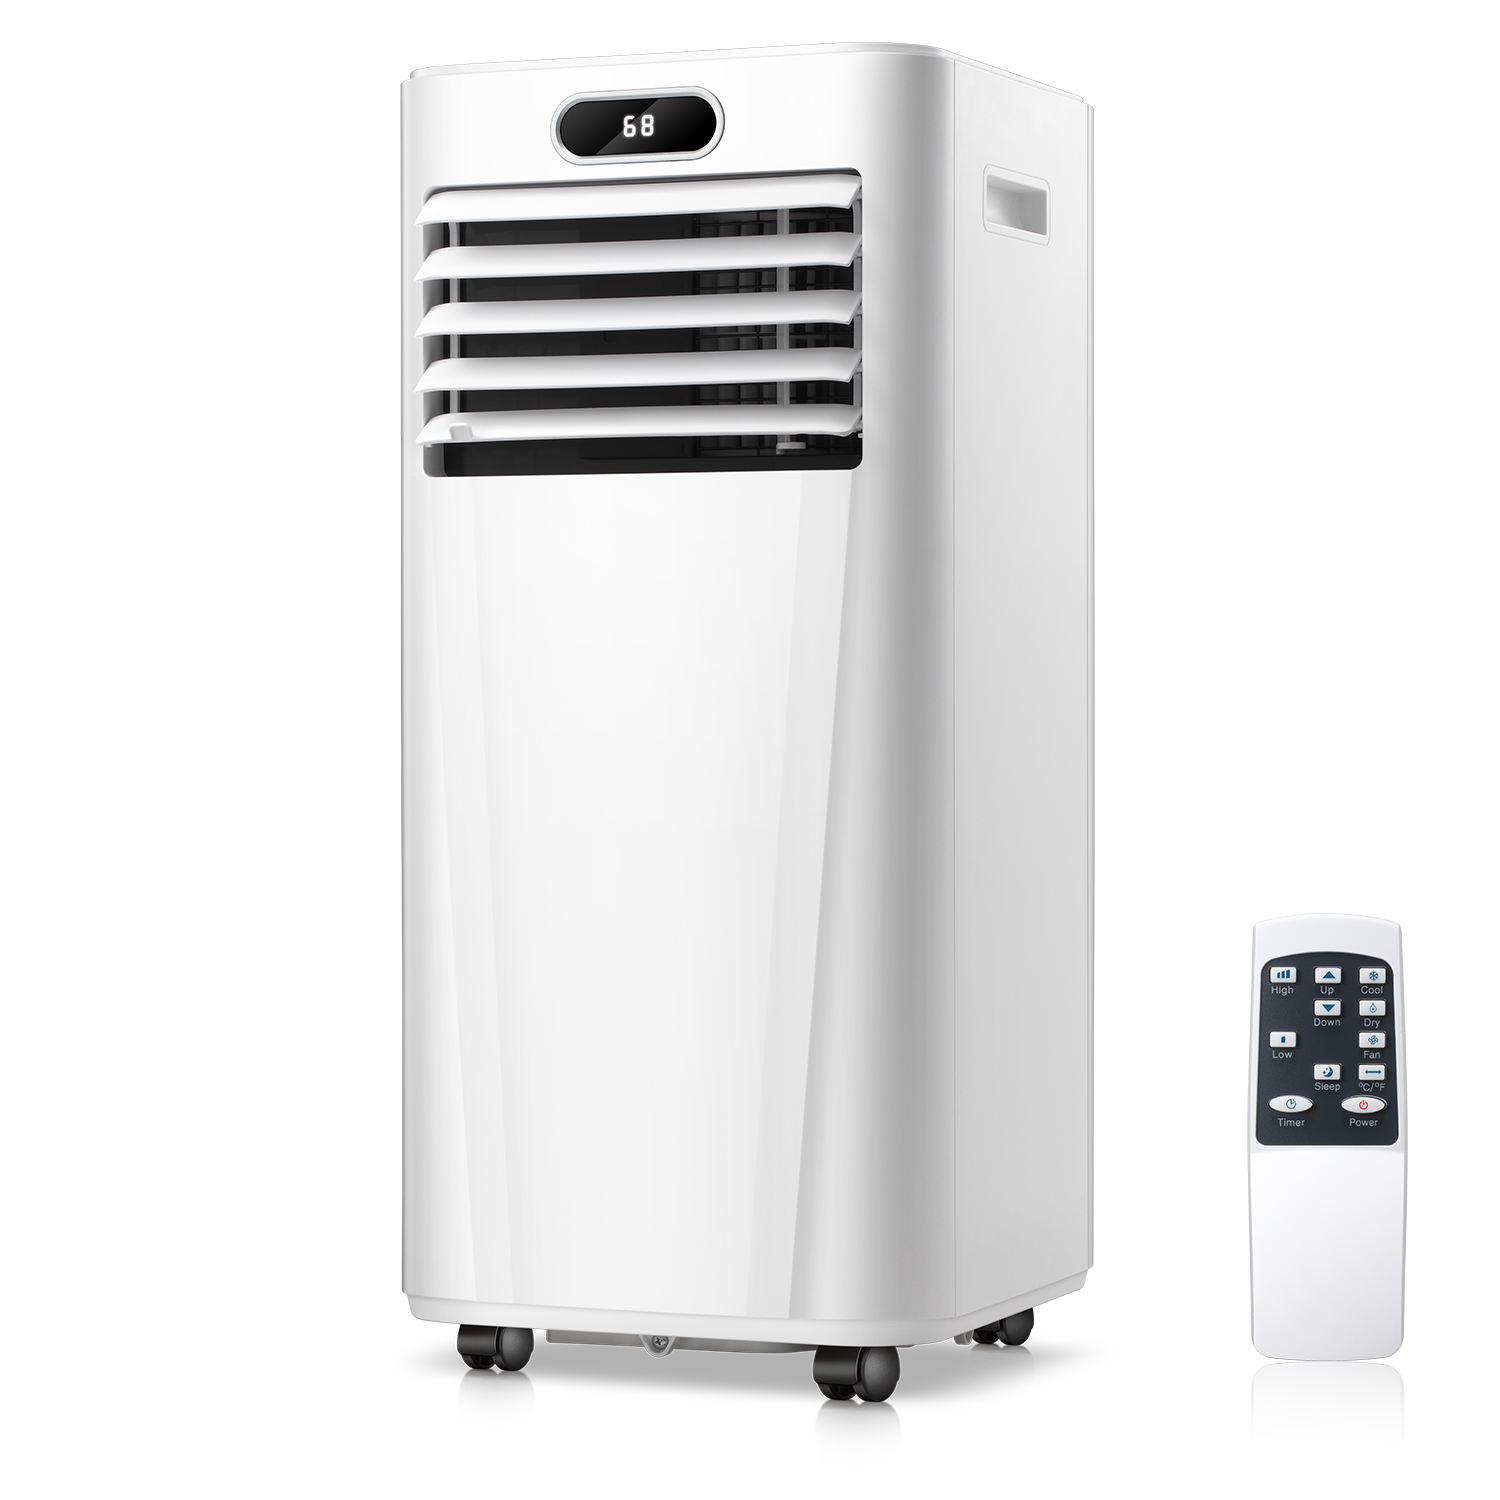 LG 8,000 BTU Portable Air Conditioner